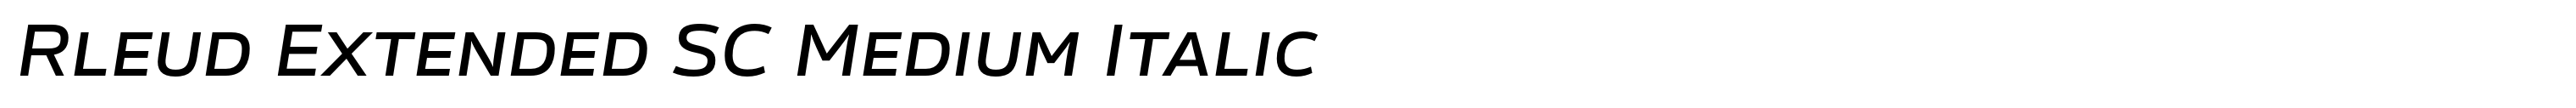 Rleud Extended SC Medium Italic